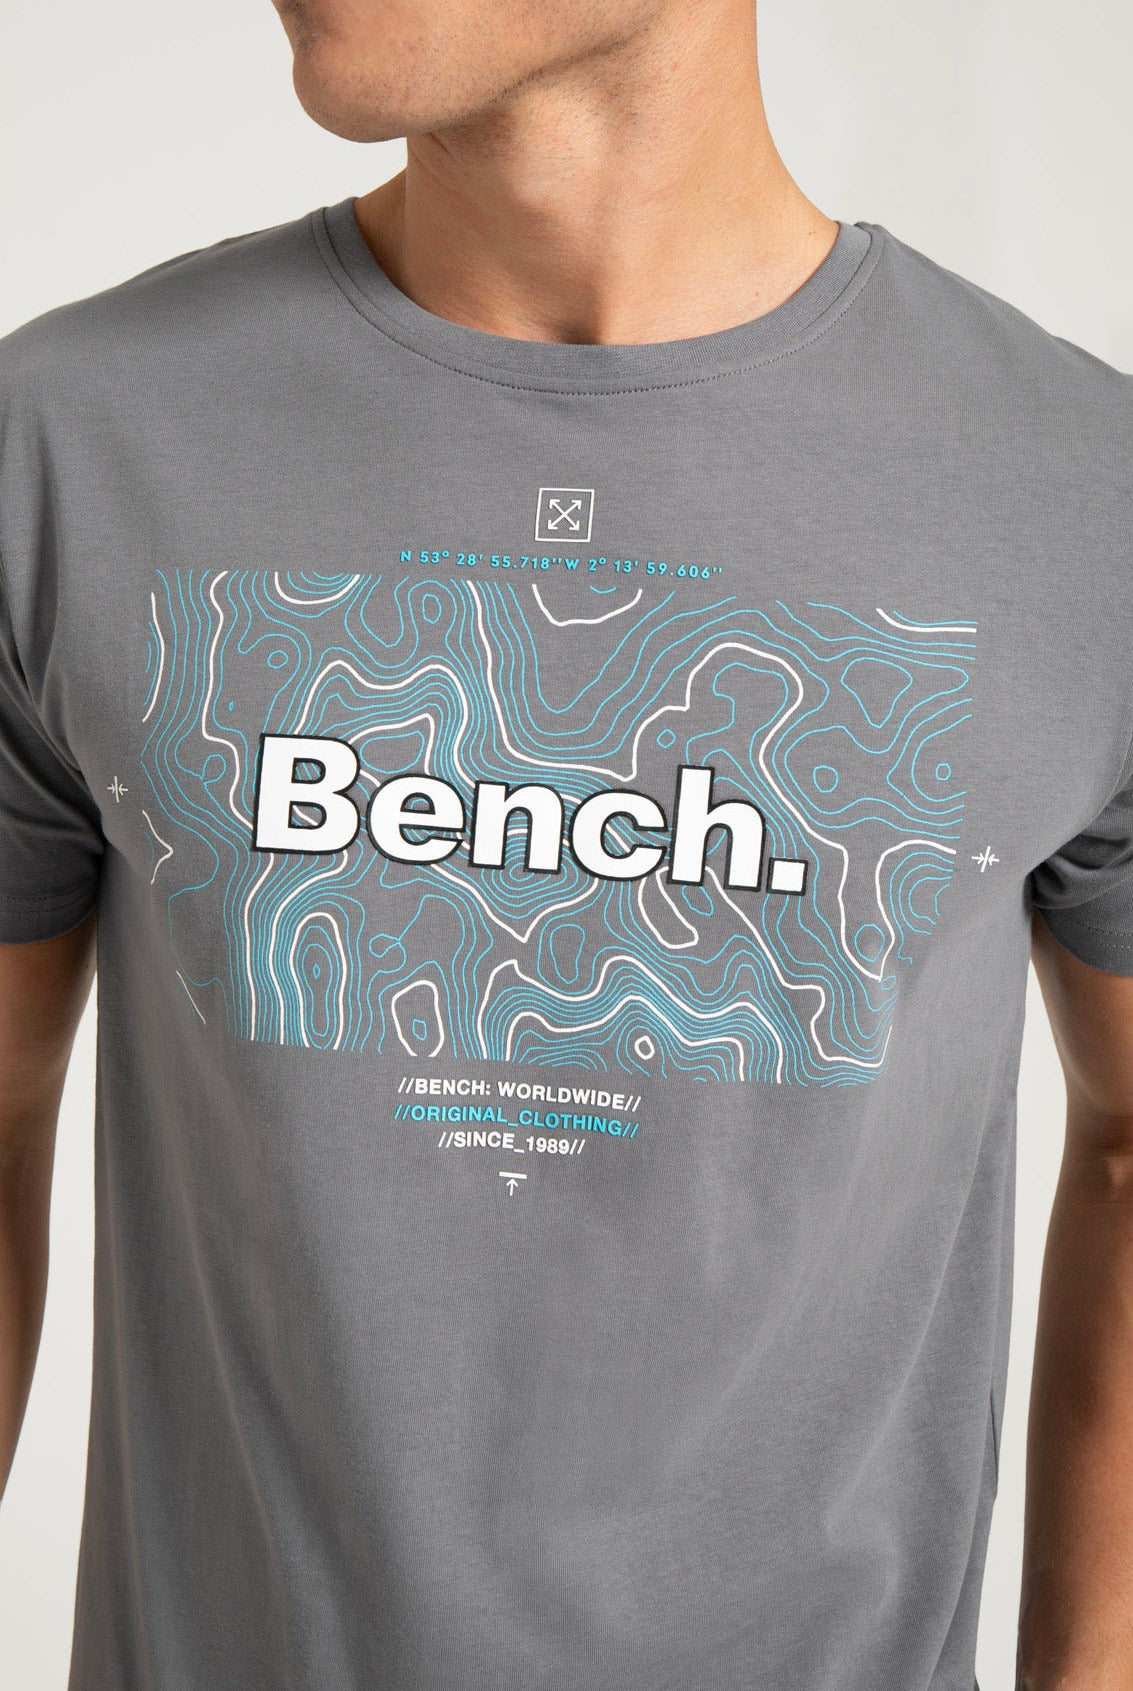 Mens 'HAWES' T-Shirt - STEEL GREY - Shop at www.Bench.co.uk #LoveMyHood